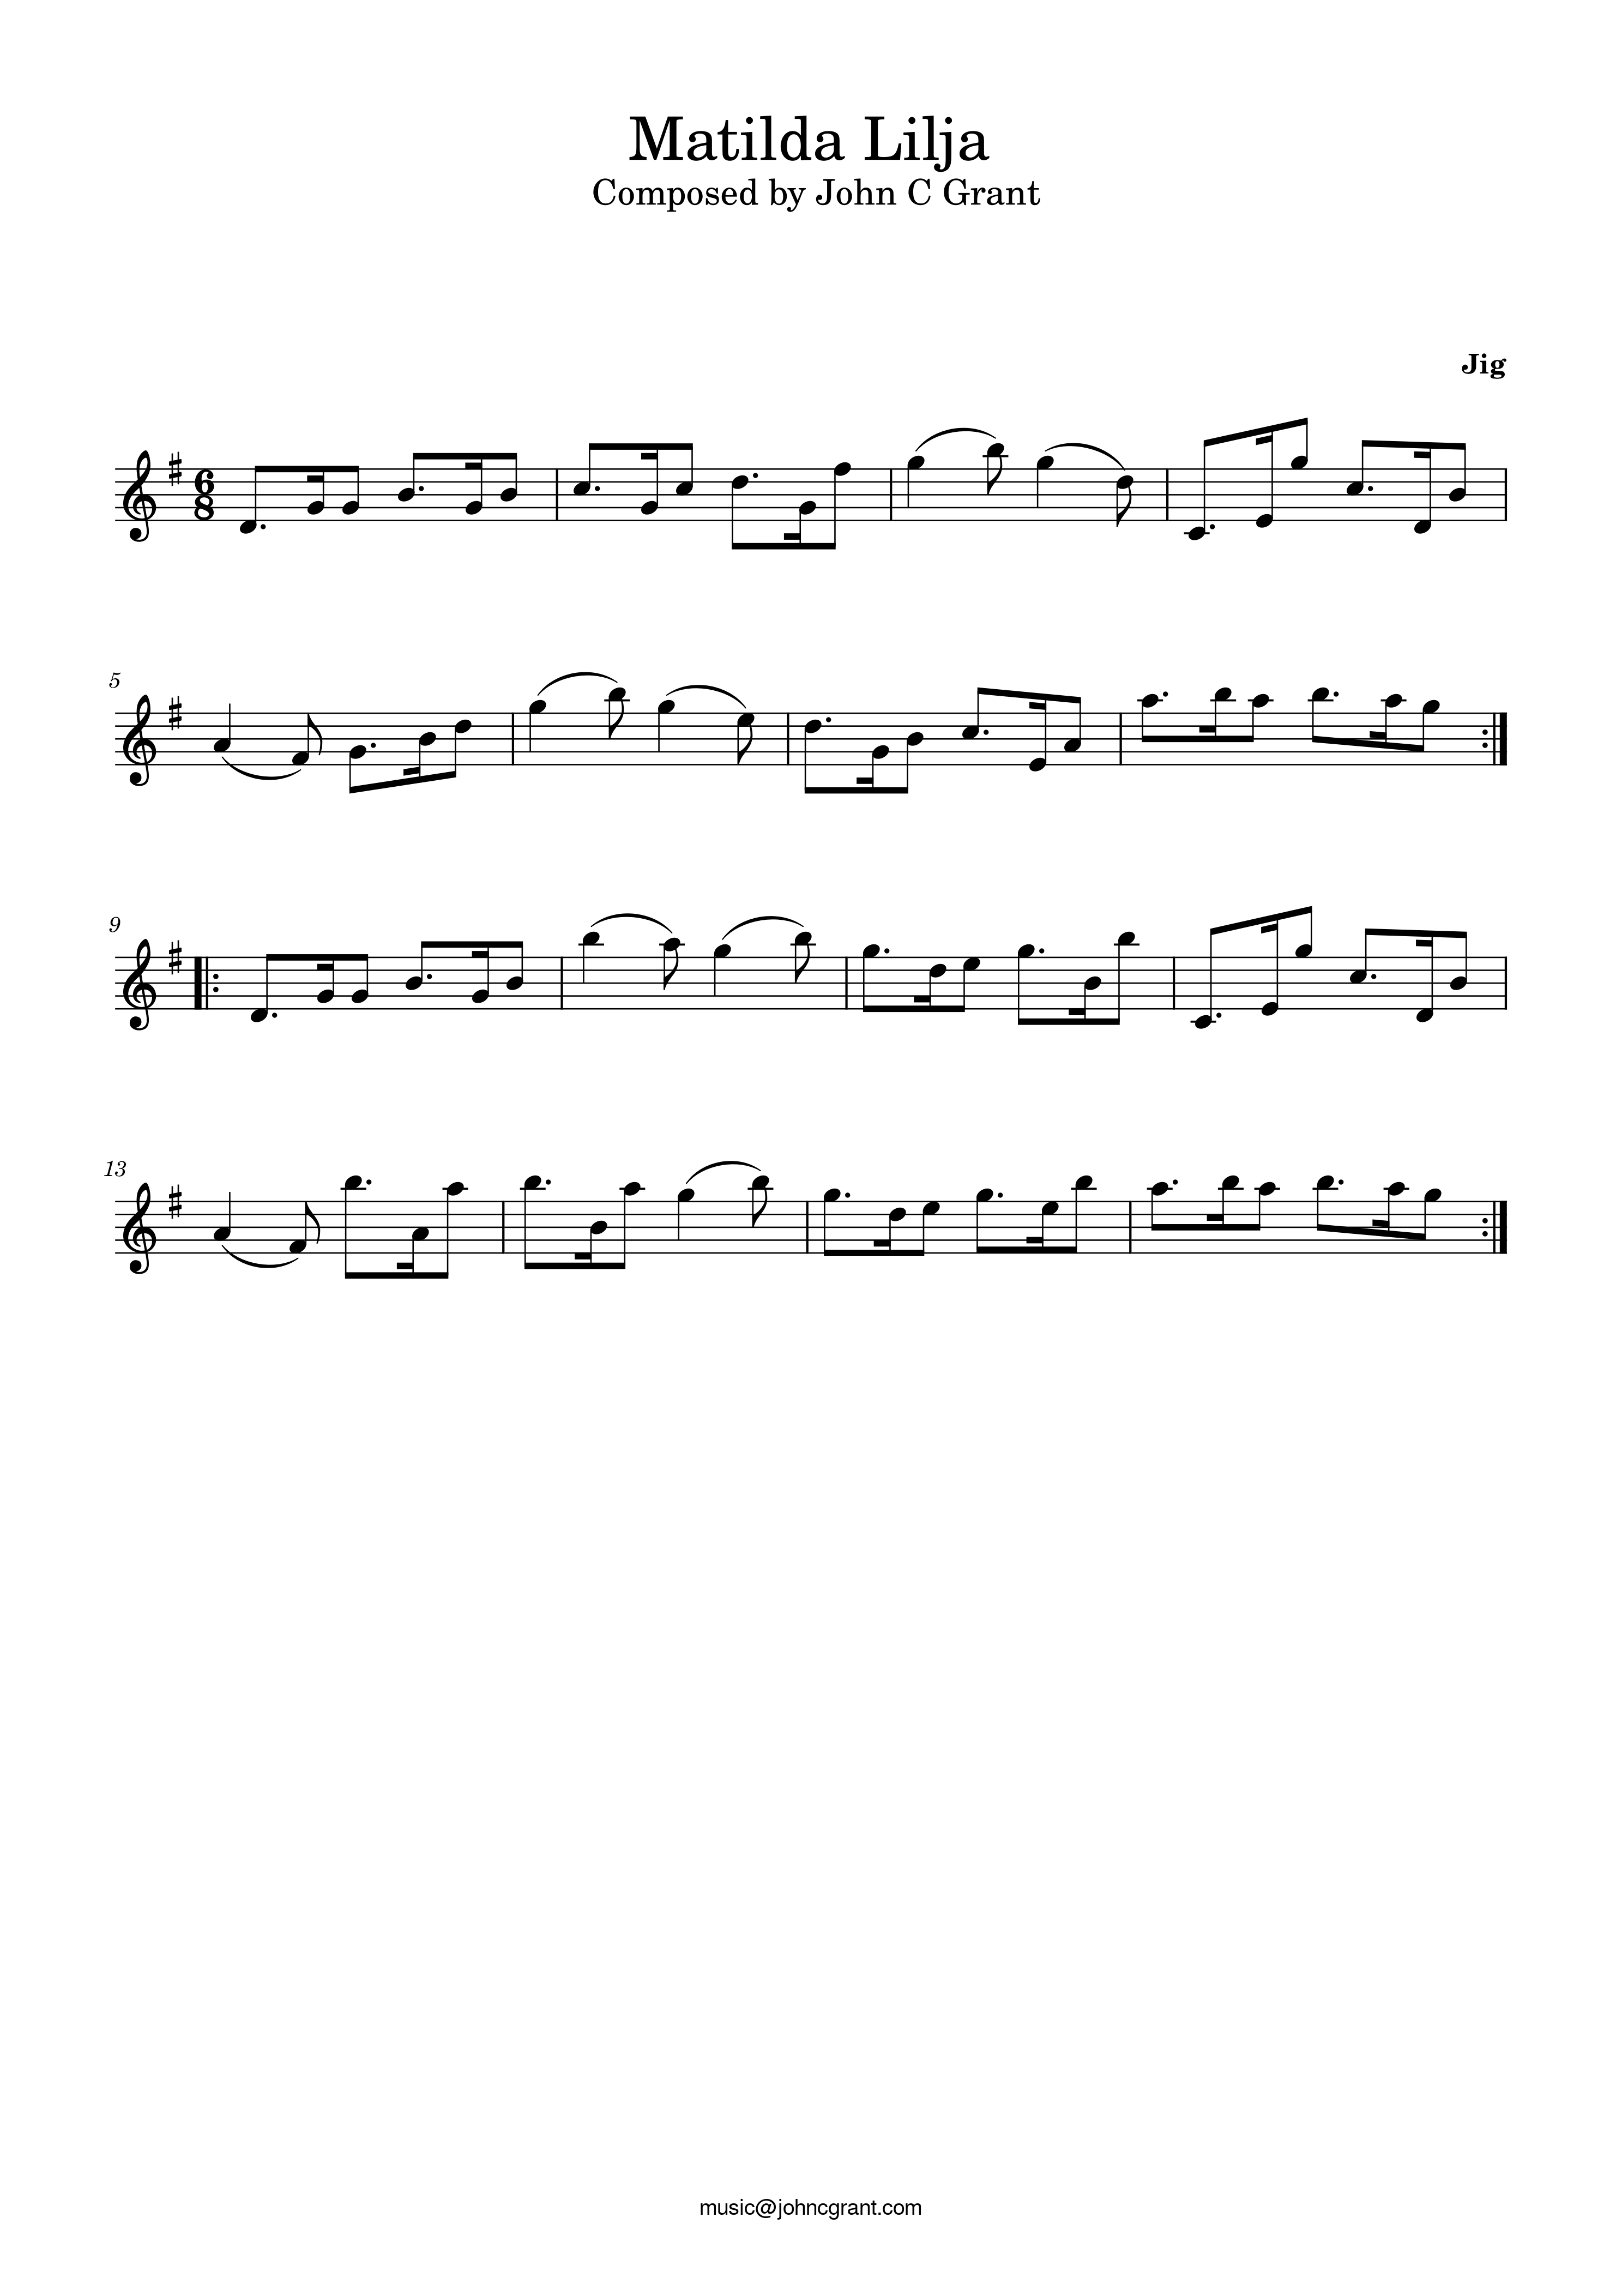 Matilda Lilja - Composed by John C Grant (https://johncgrant.com). Traditional composer from Kilmarnock, Ayrshire, Scotland.